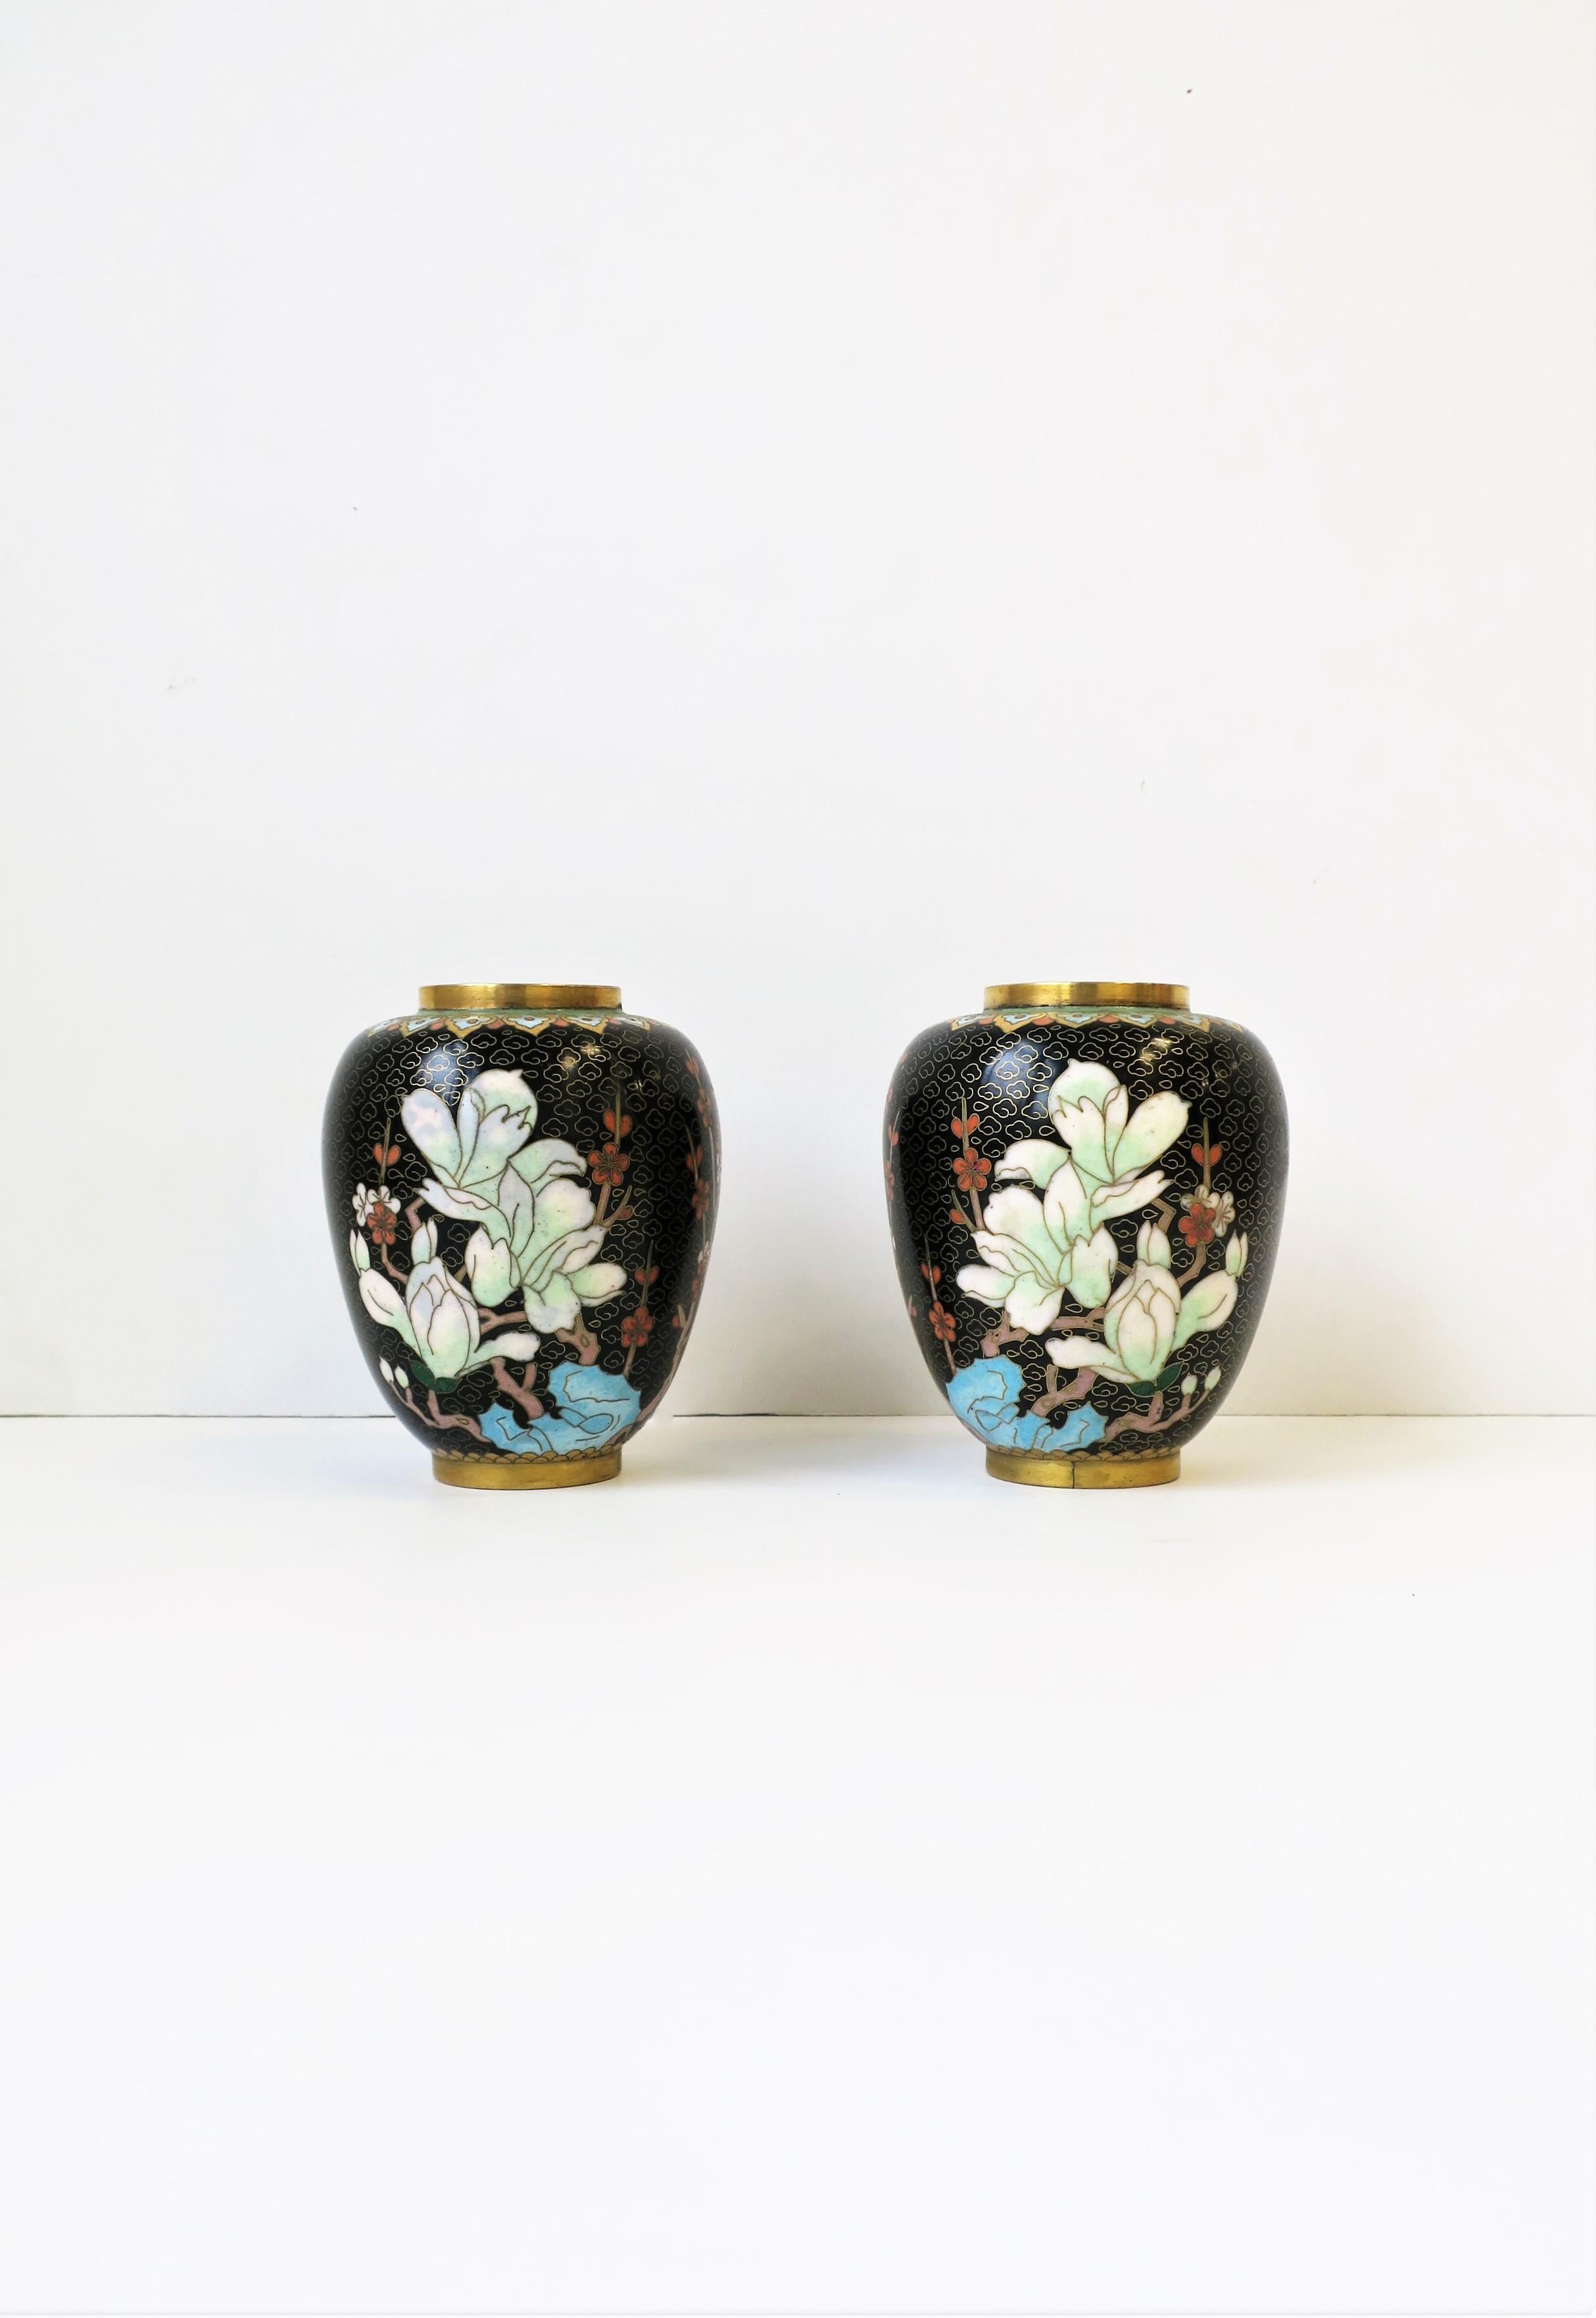 Cloisonné́ Enamel and Brass Flower Vases Black Gold and Pastel Colors, Pair For Sale 3